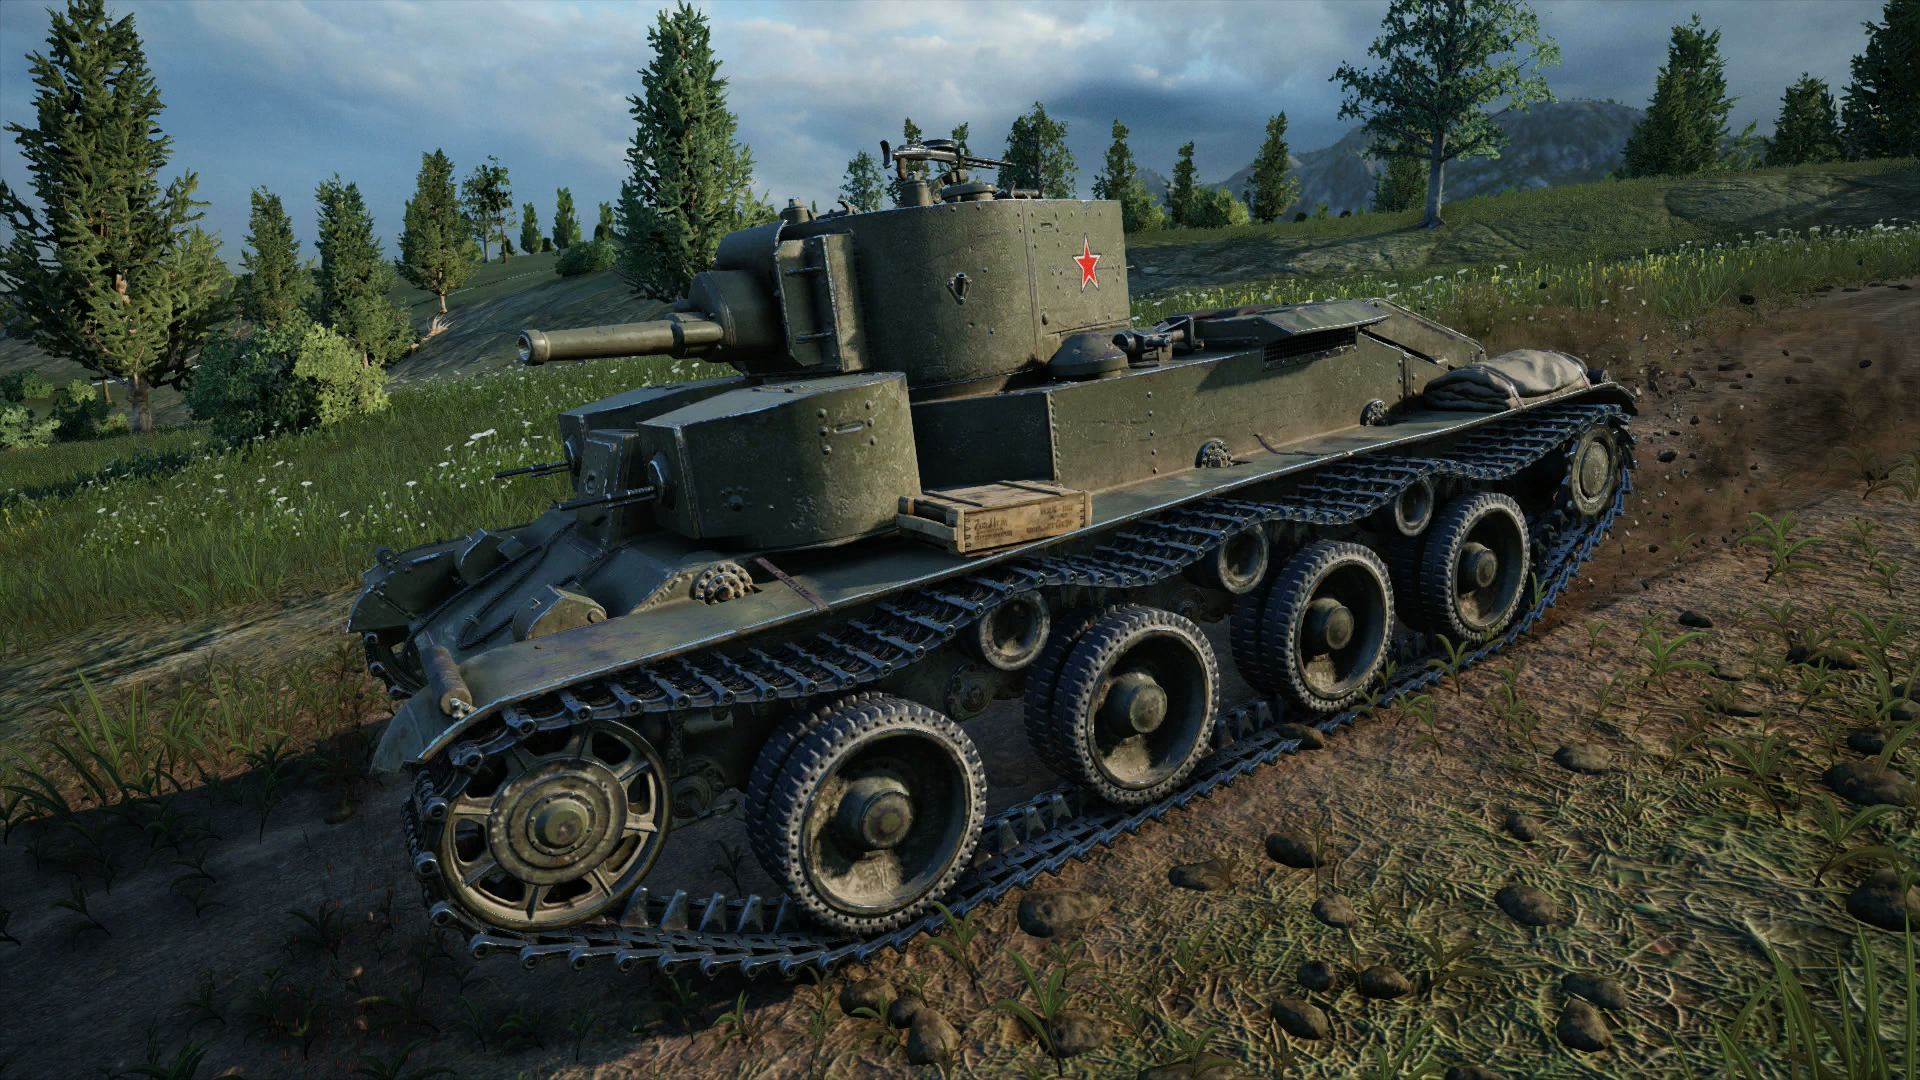 Tanks 29. Т-150 танк World of Tanks. Т-29 танк. Т29. Танк т29 в World of Tanks.